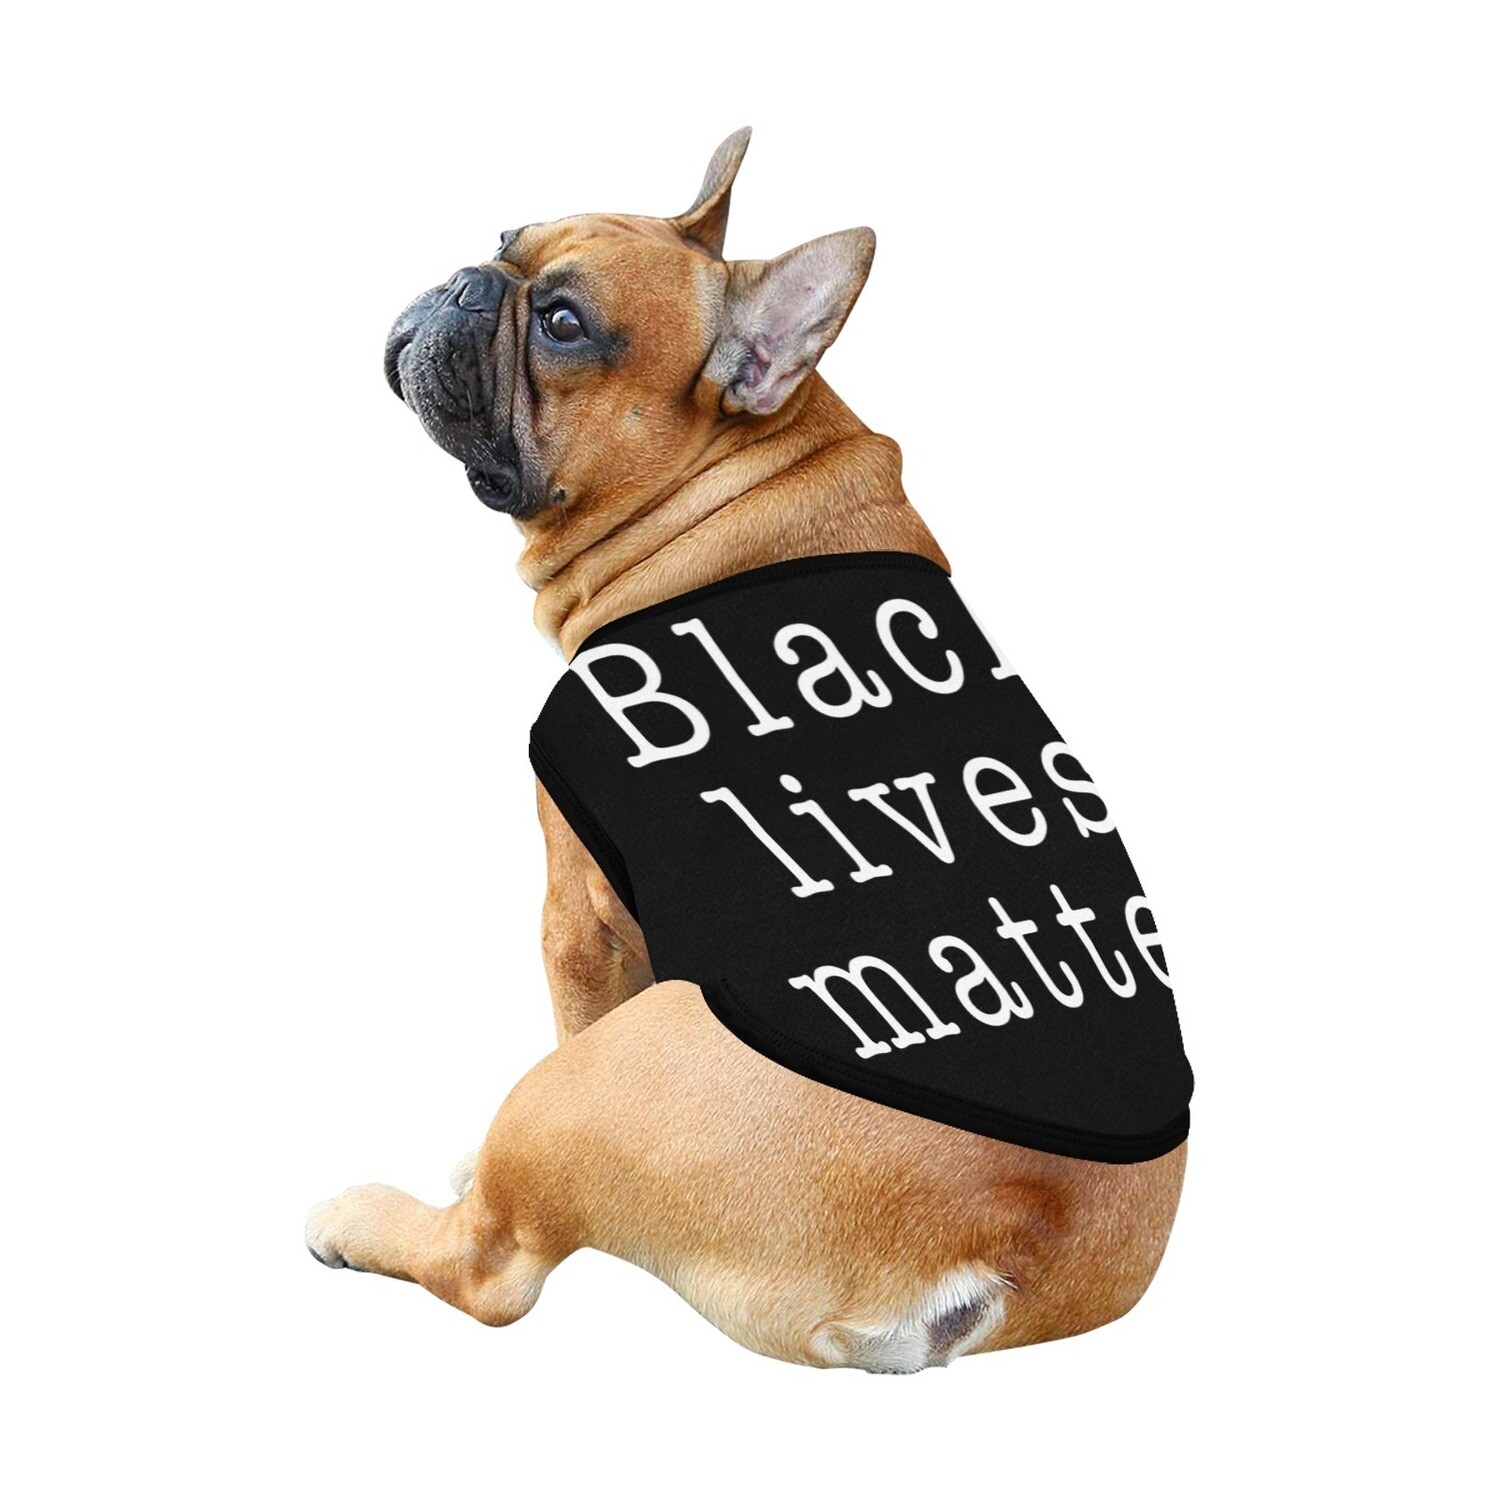 🐕 ✊🏽 Black lives Matter dog shirt, dog tank top, dog t-shirt, dog clothes, Gift, 7 sizes XS to 3XL, black and white